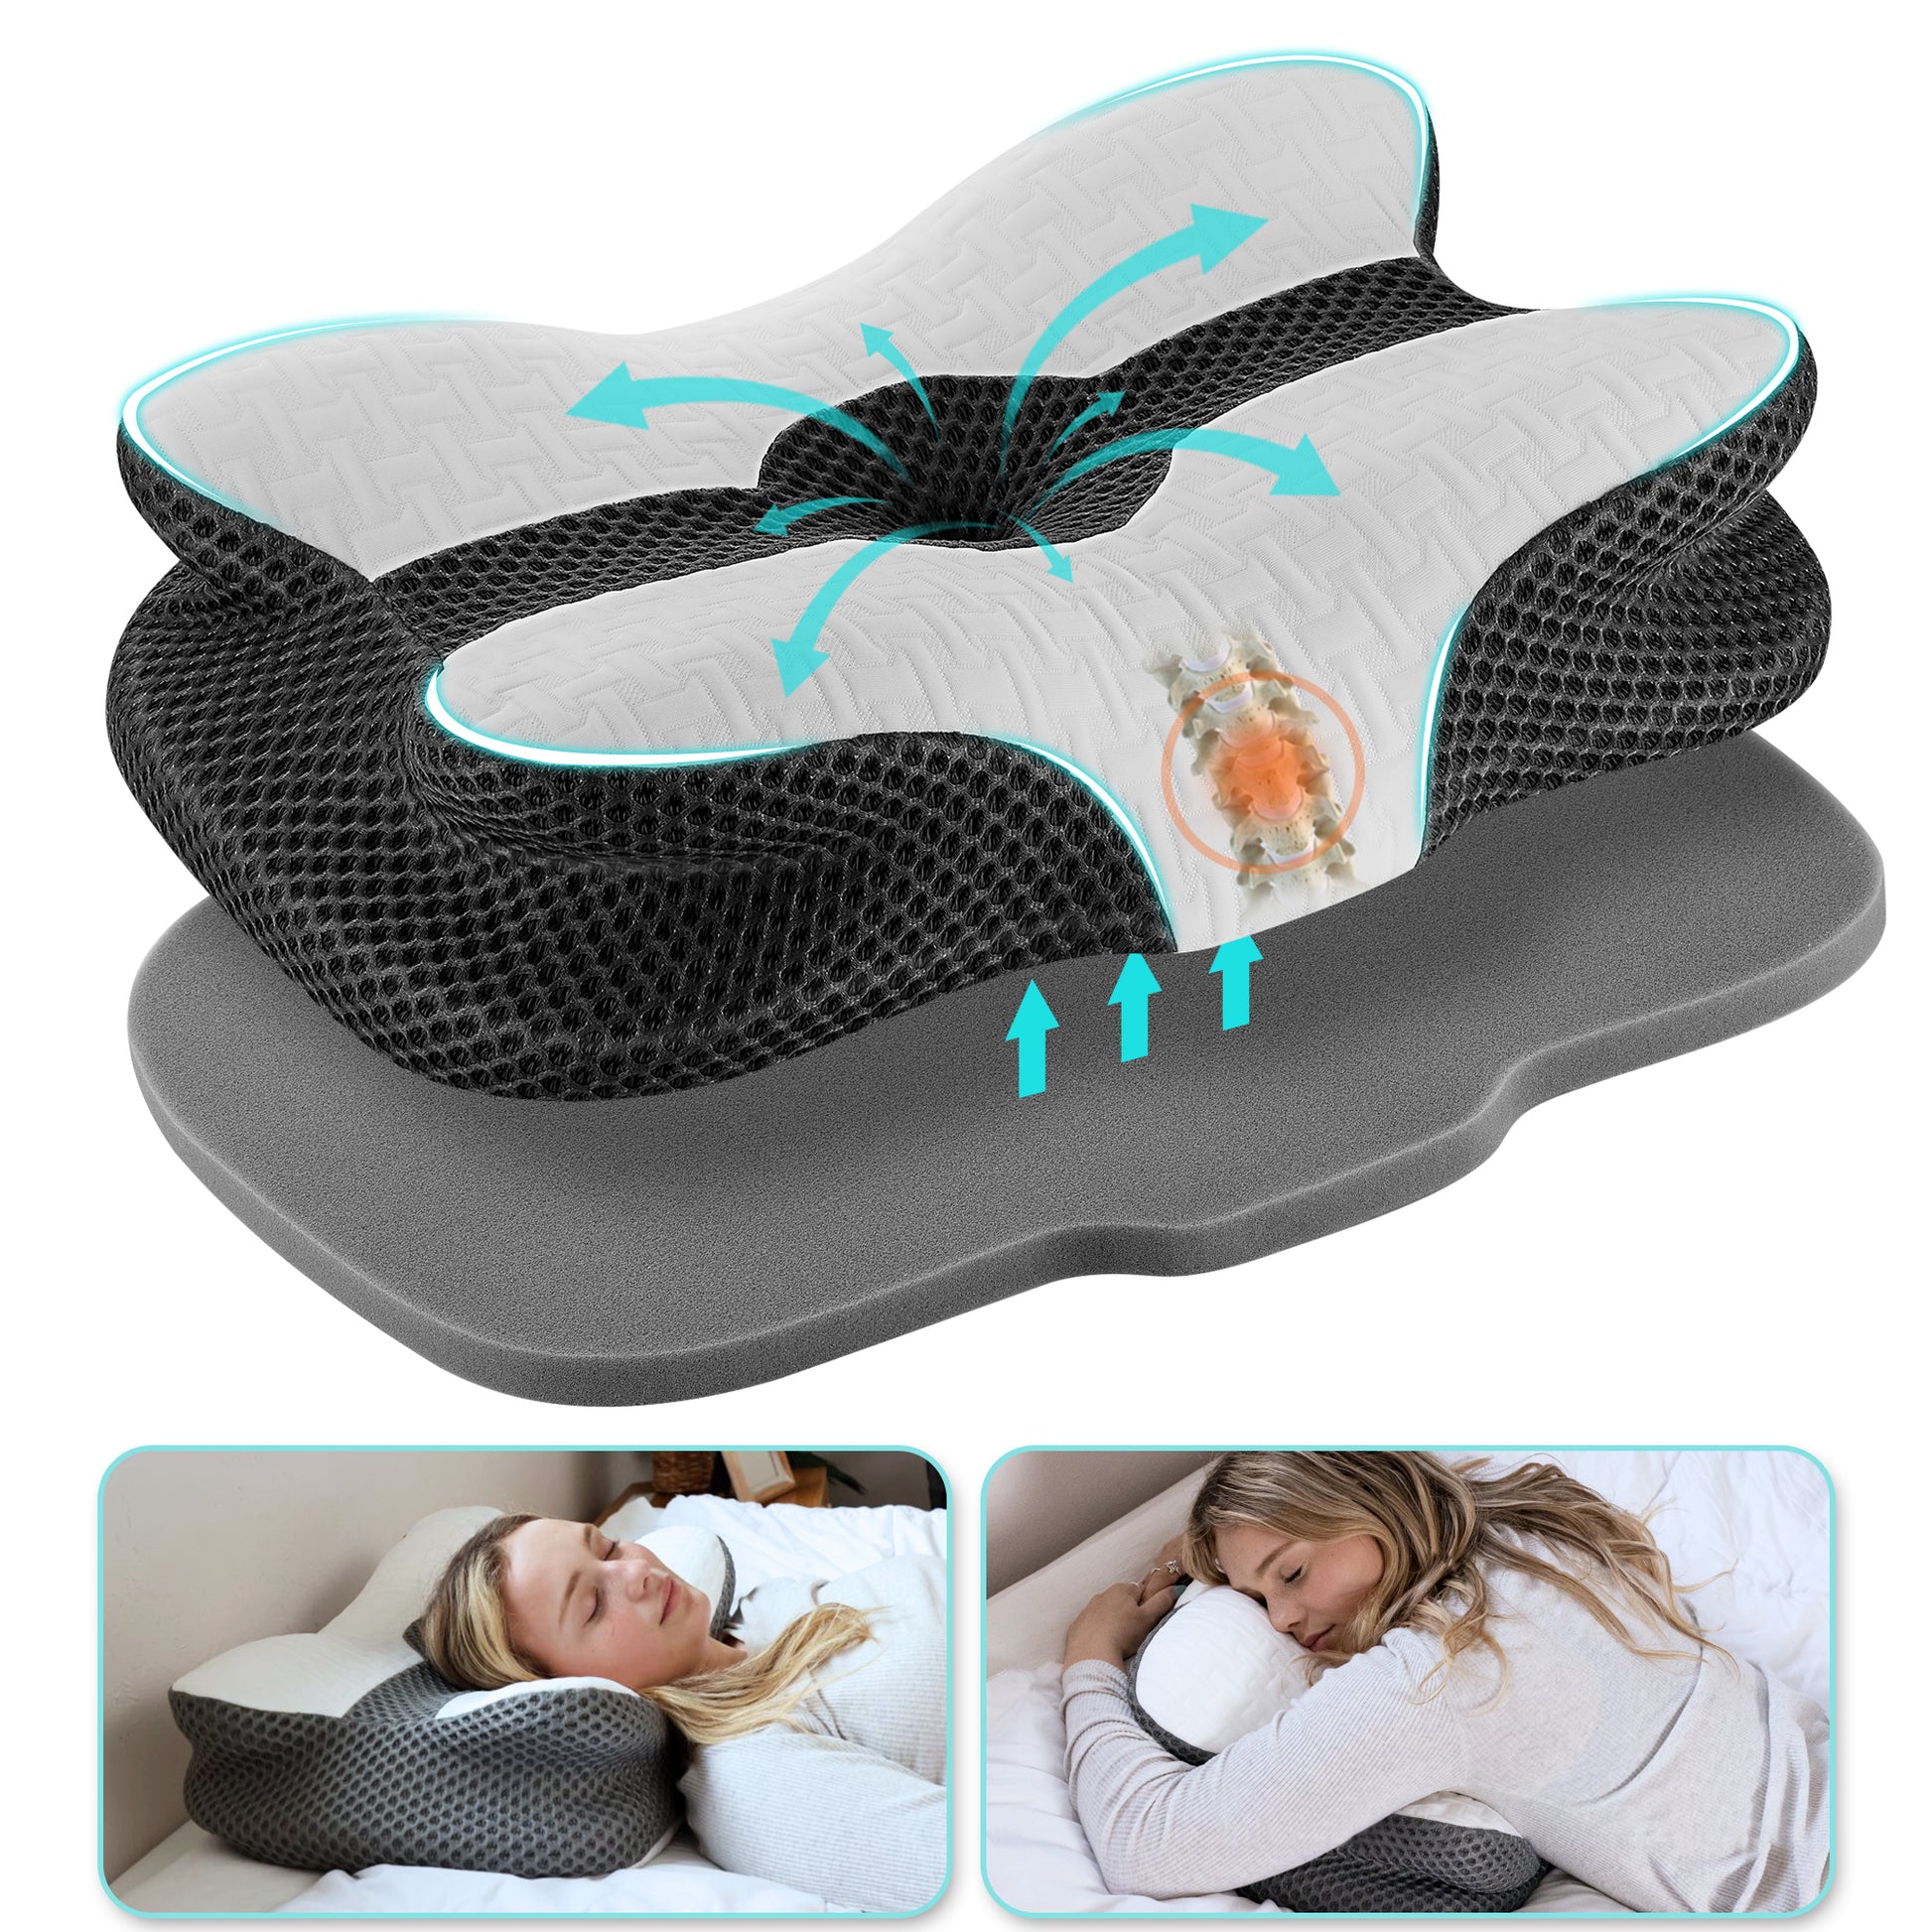 buy orthopedic lumbar support pillow for bed - Elviros